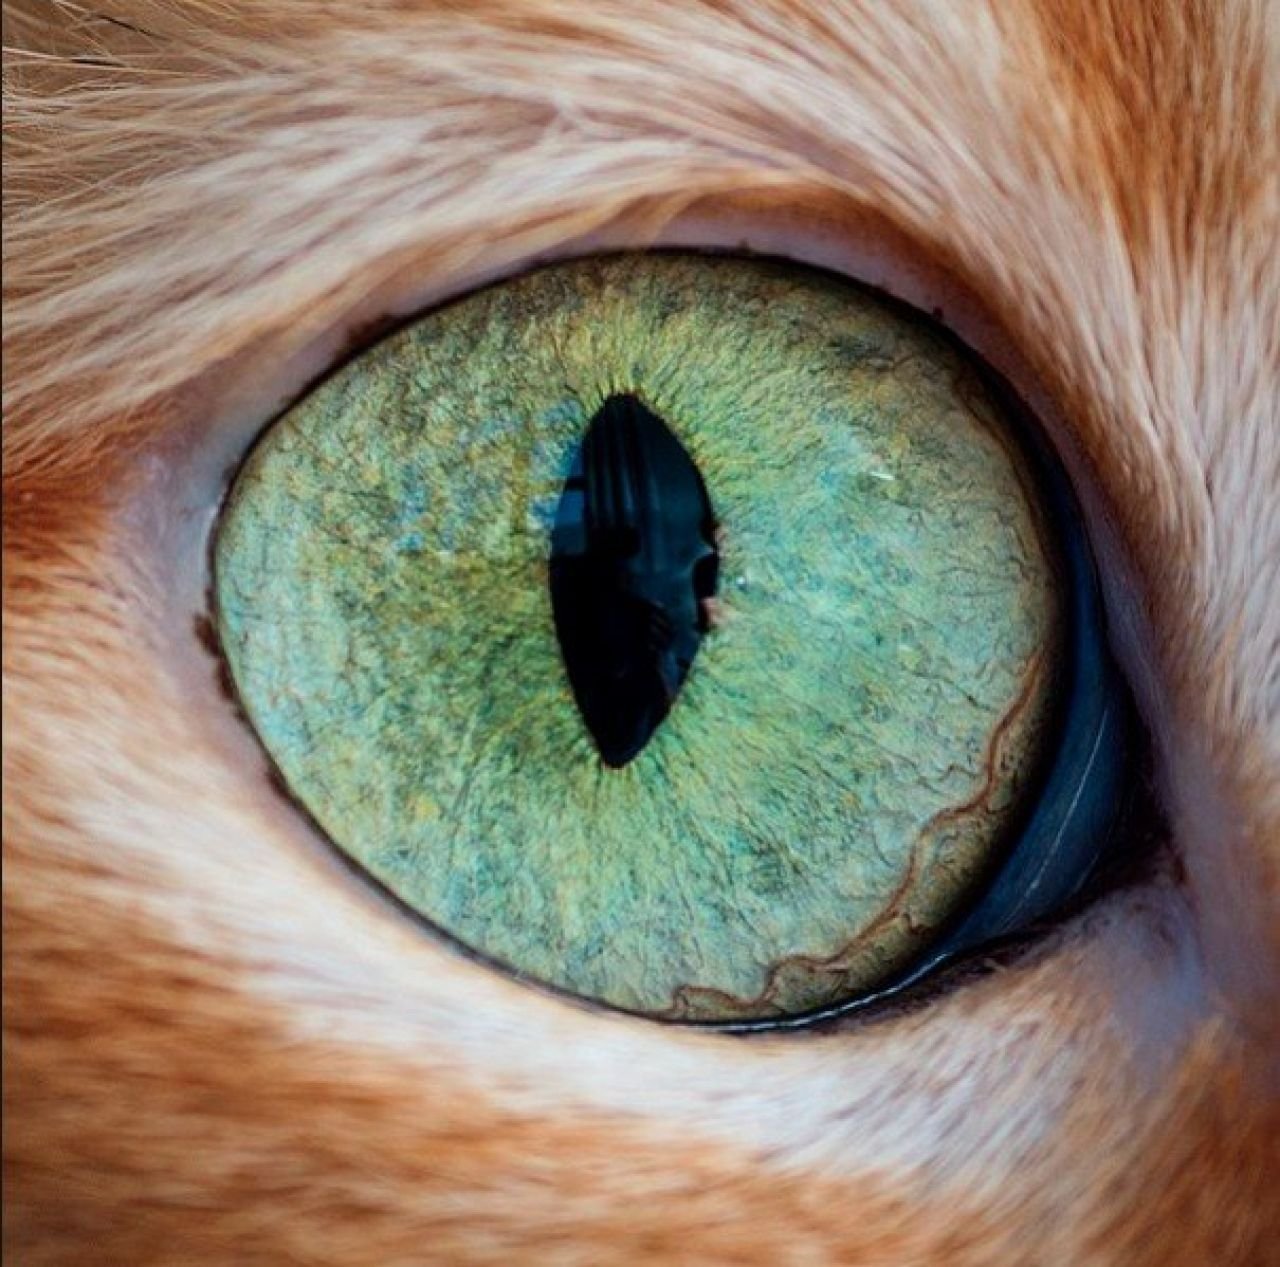 Название животного глаза. Глаза кошки. Кошачий глаз. Кошачий зрачок. Зрачок глаза кошки.